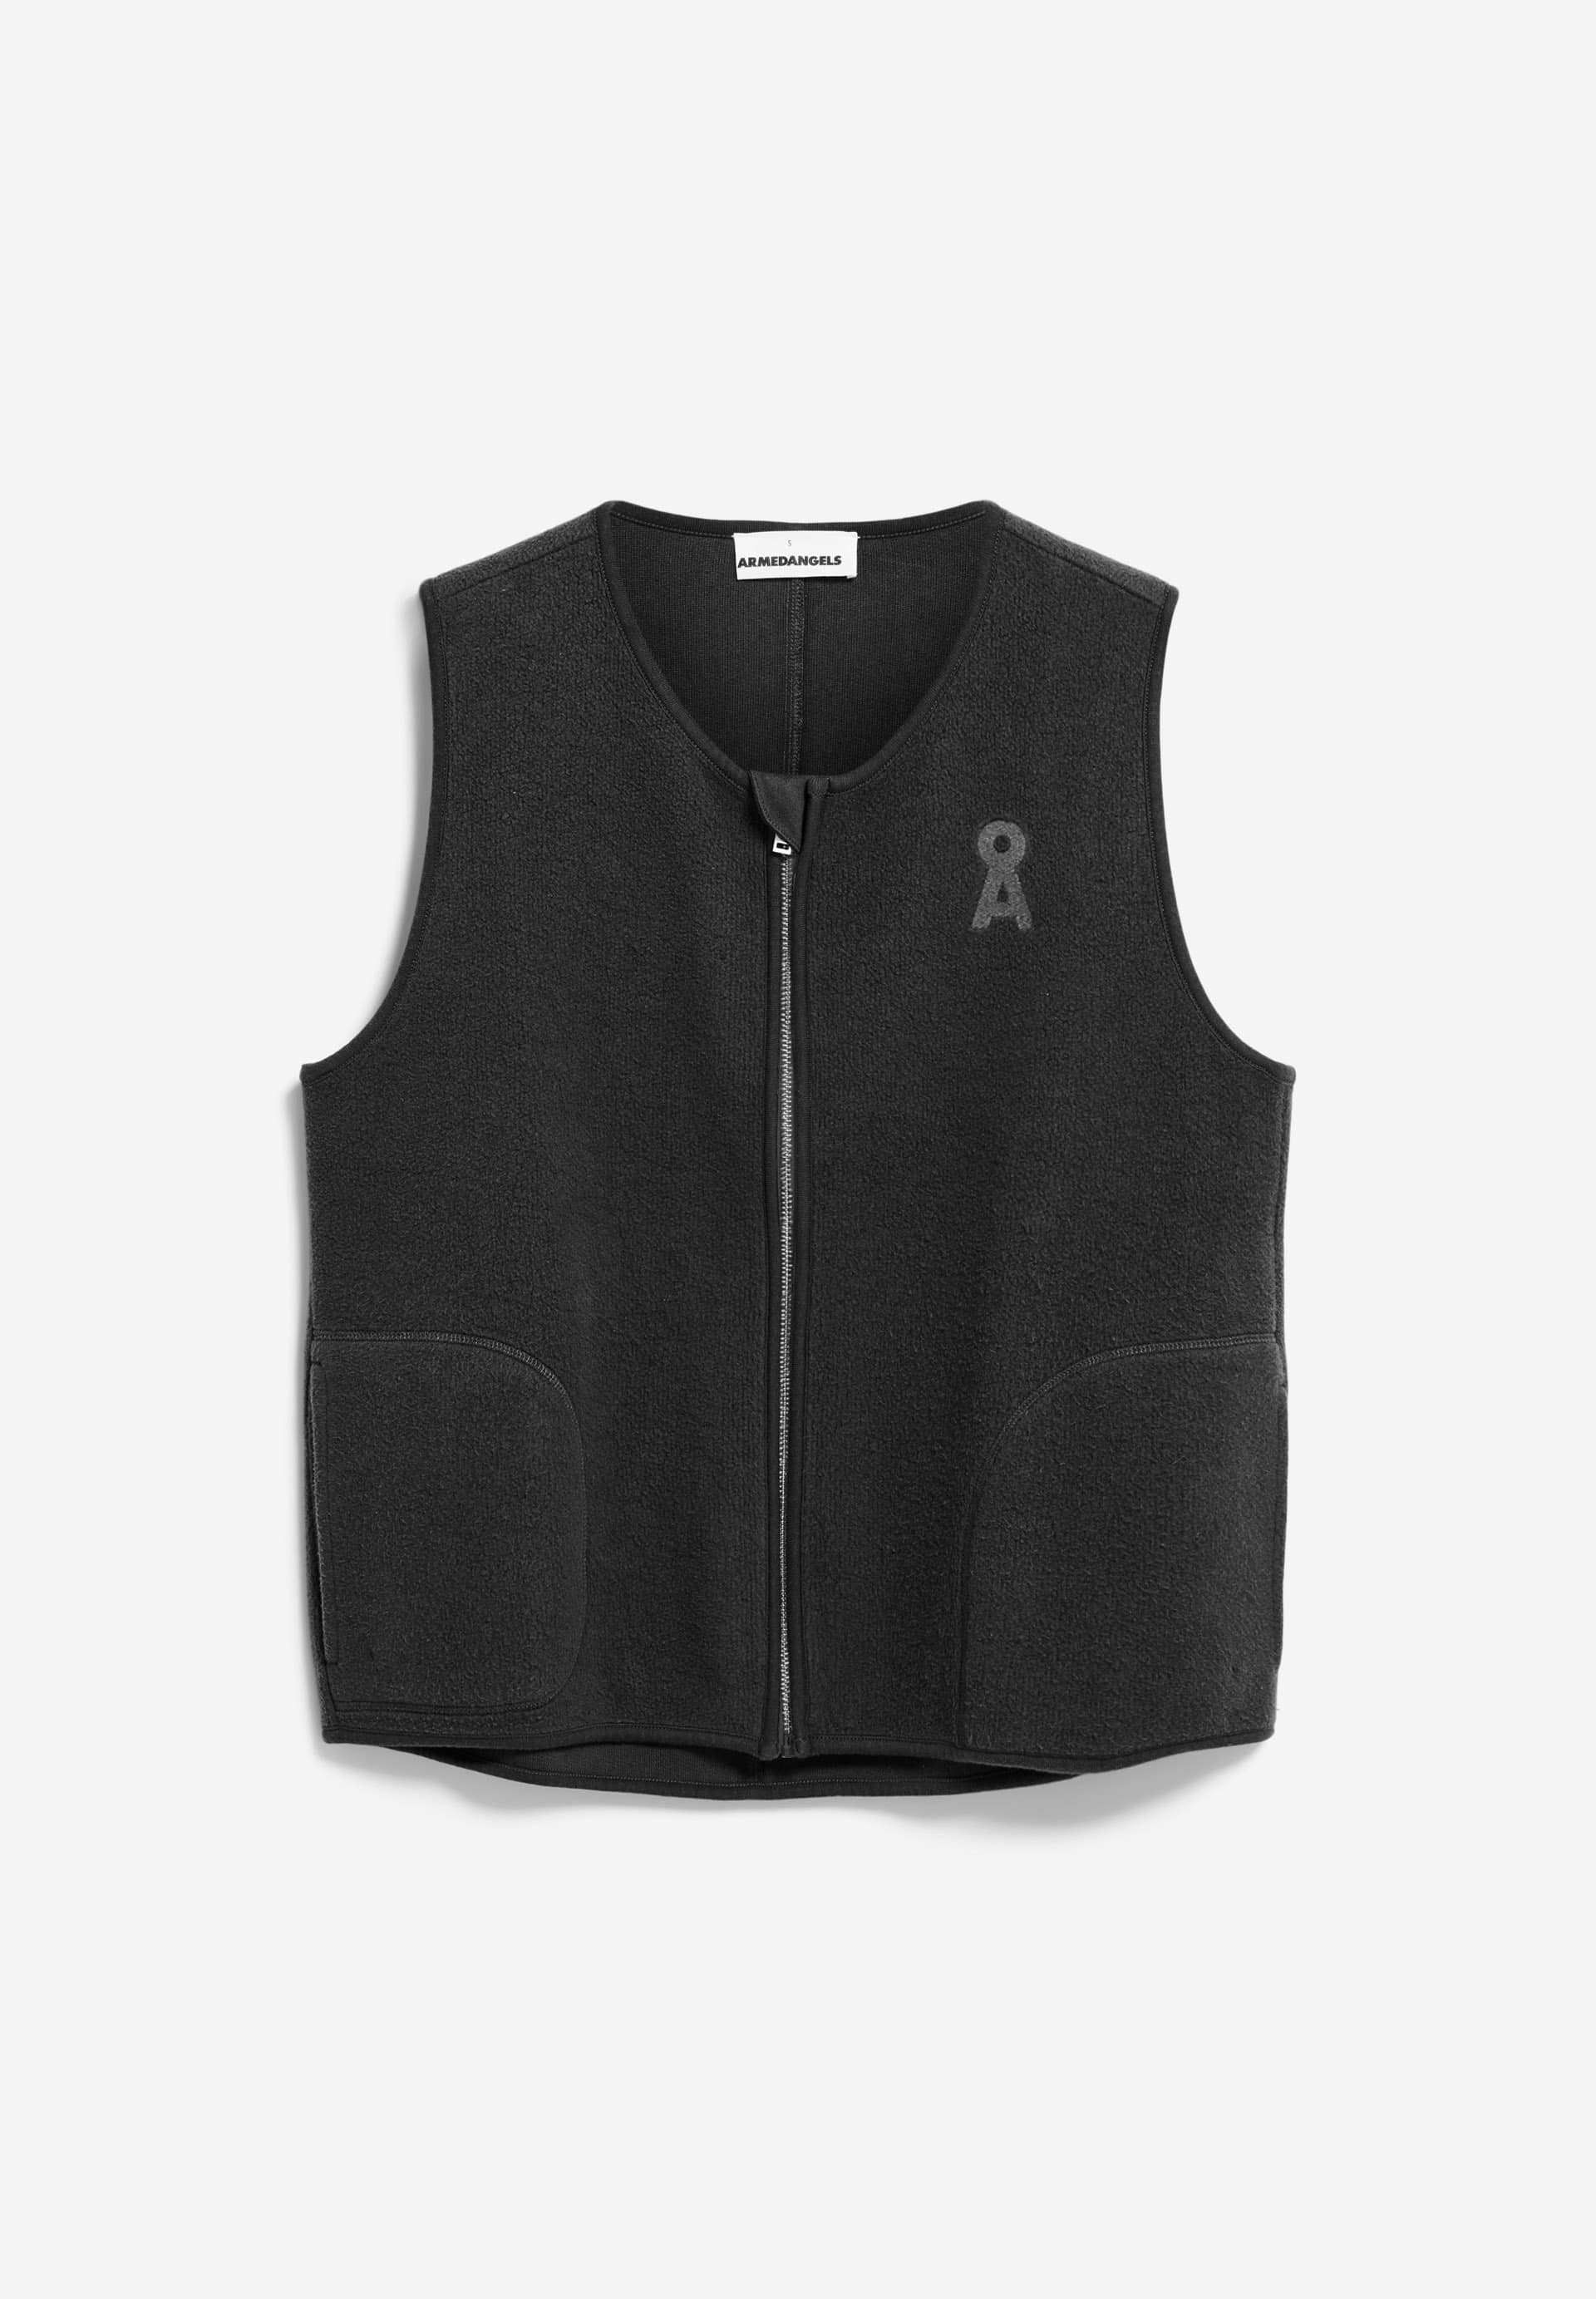 AARLENAA Activewear Sweat Jacket Loose Fit made of Organic Cotton